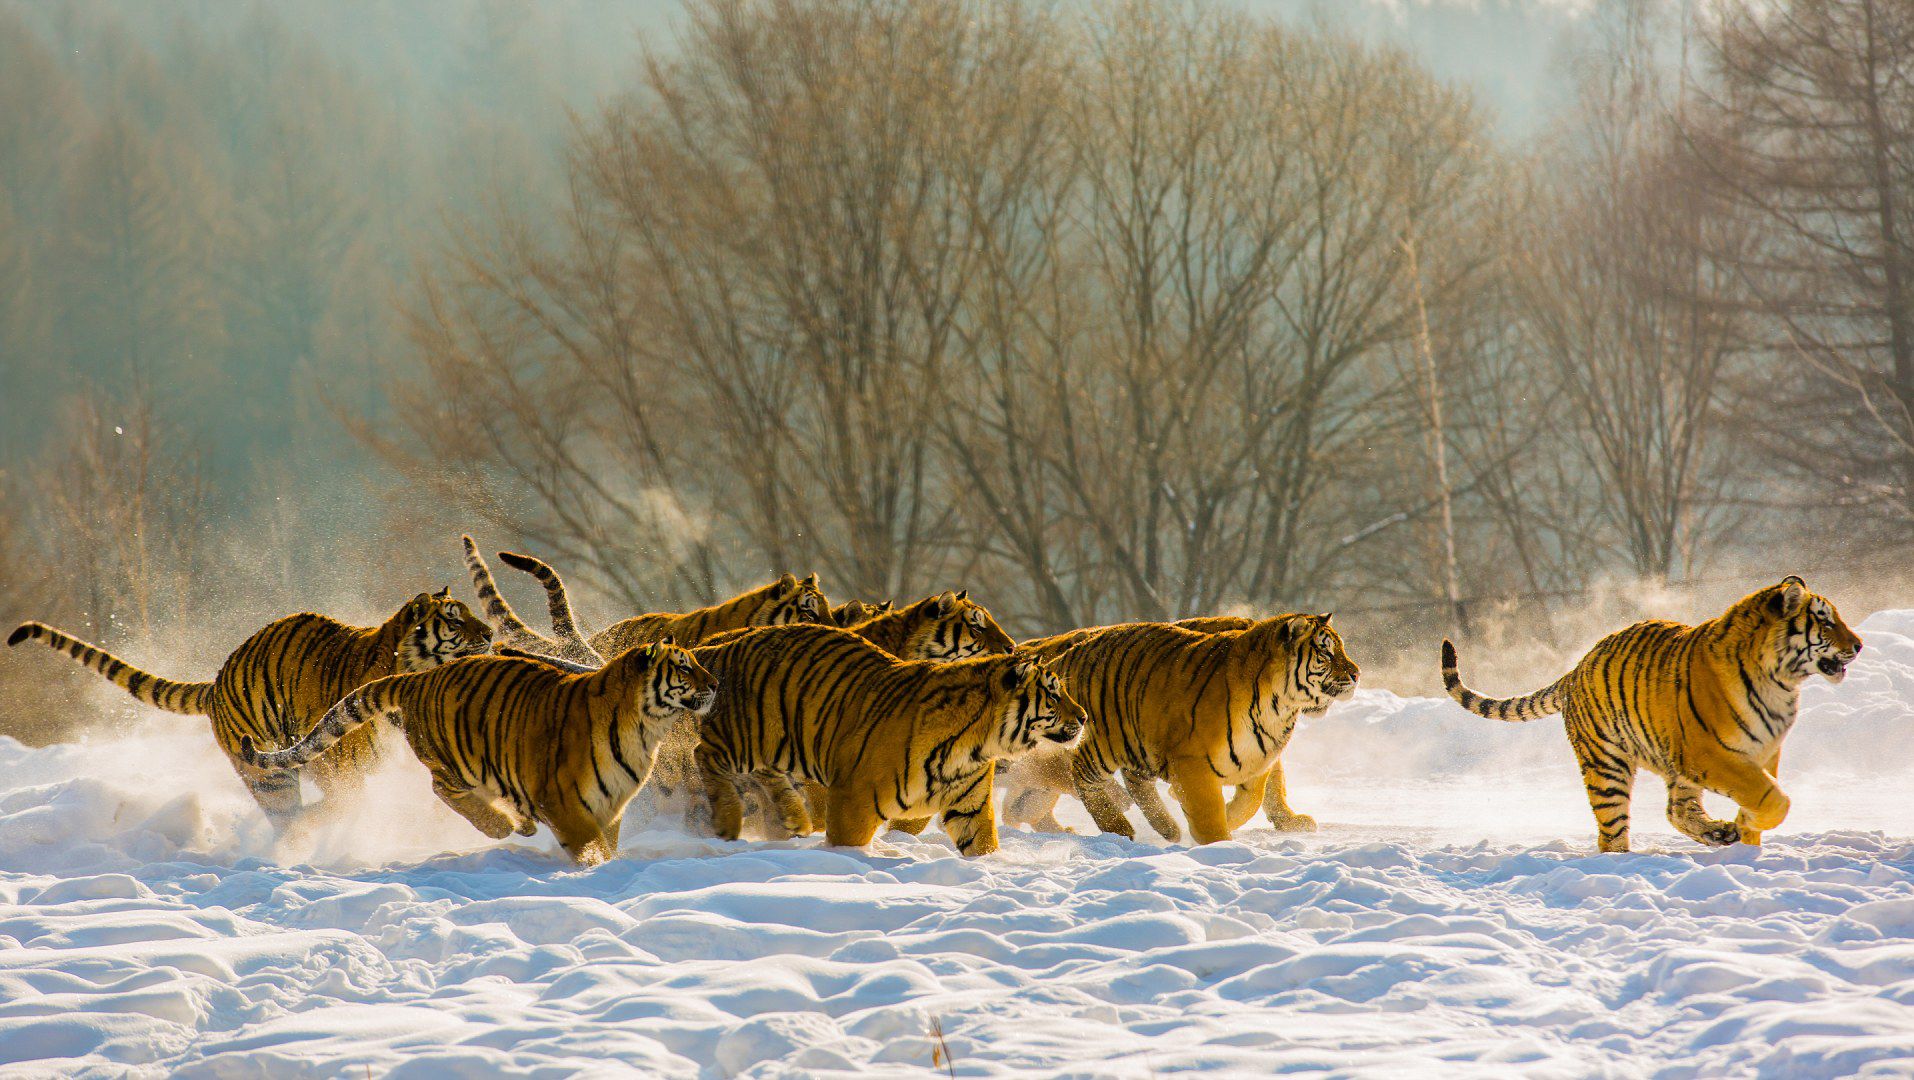 Зимний тигр